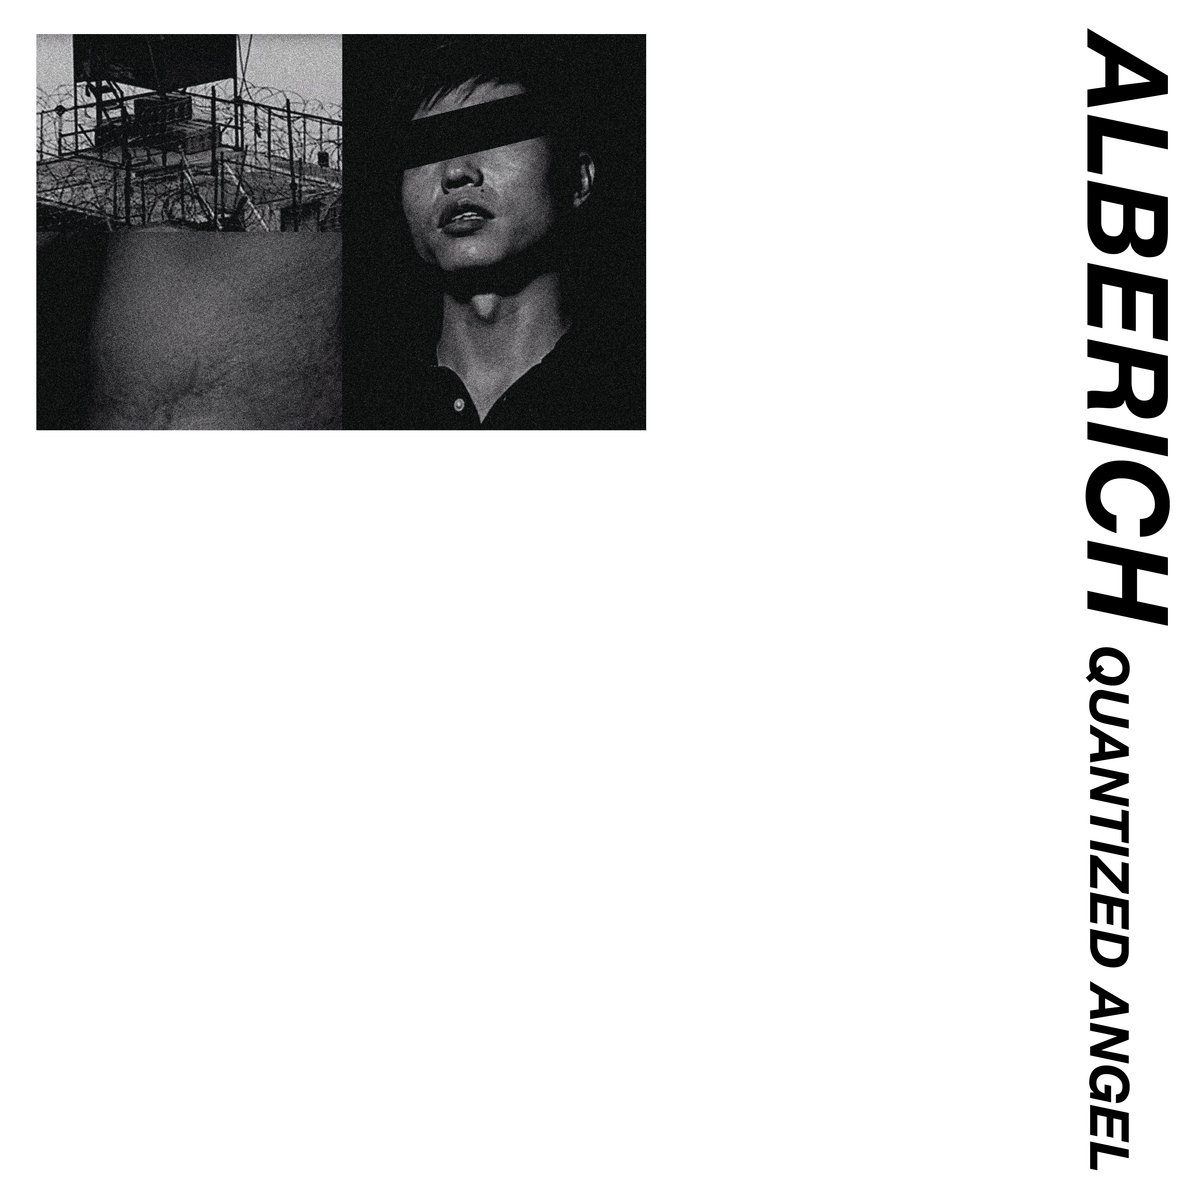 Alberich – Quantized Angel